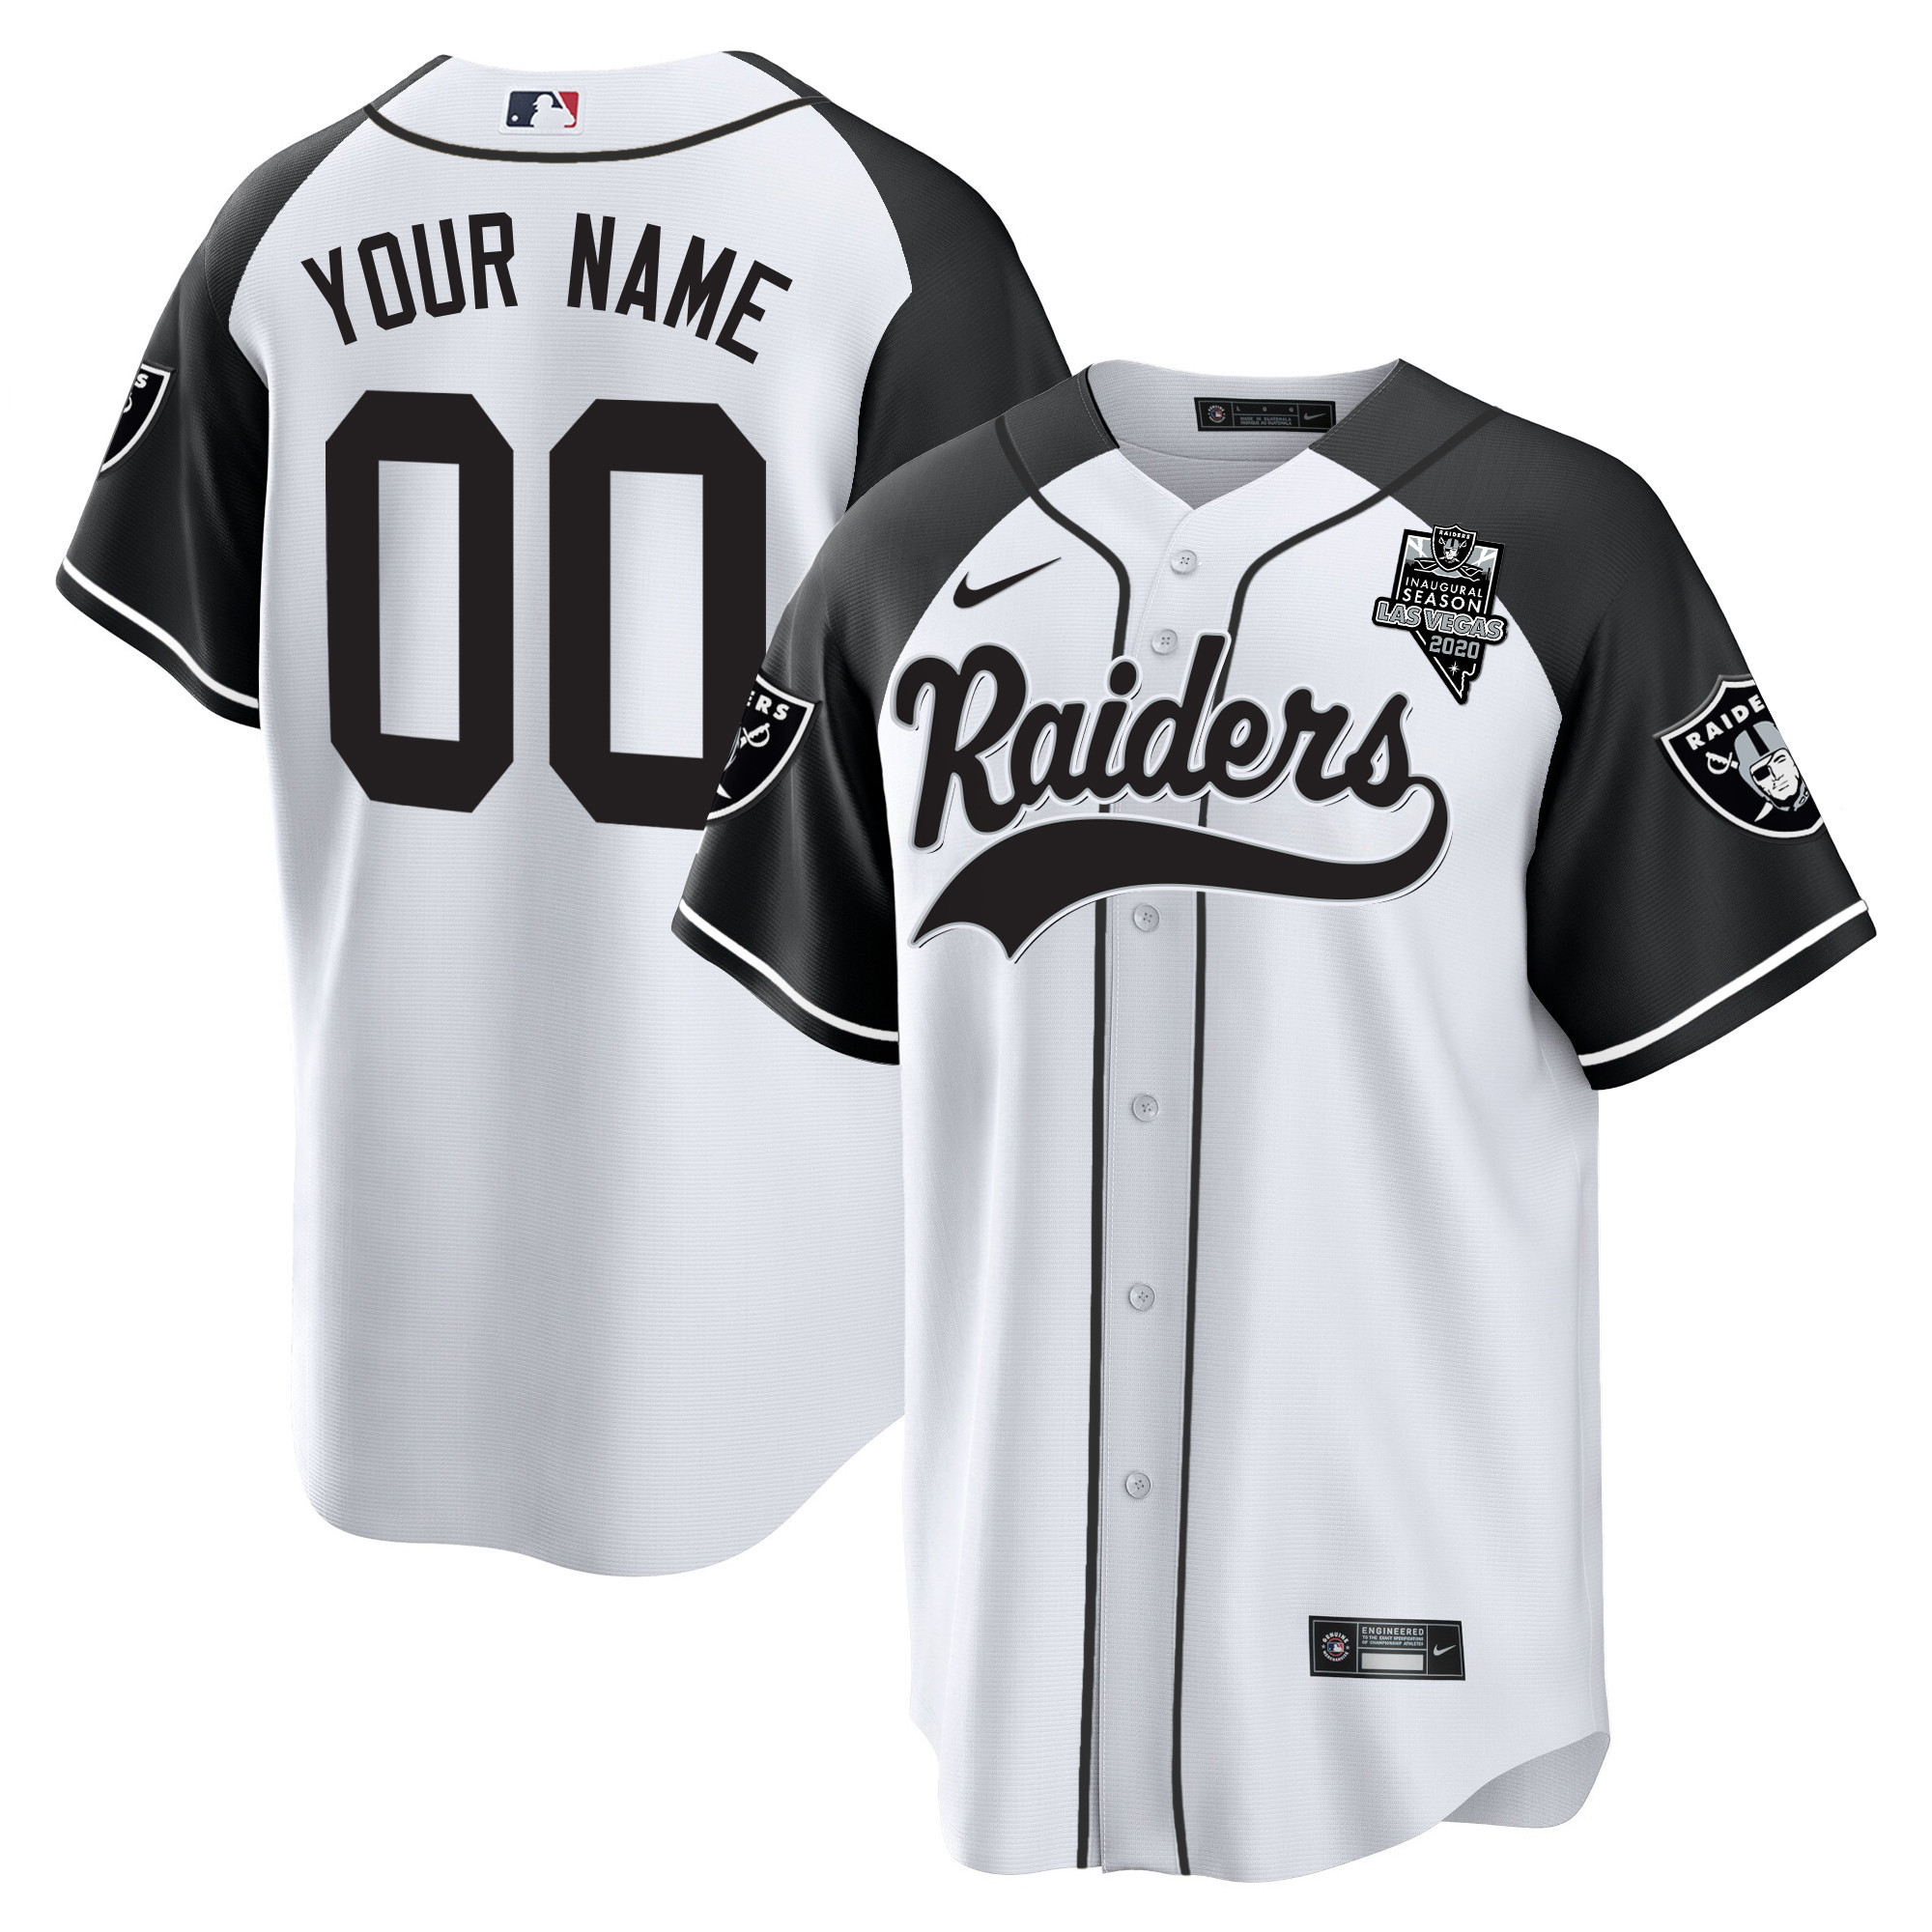 Raiders Baseball Custom Jersey - All Stitched - Linitee Store